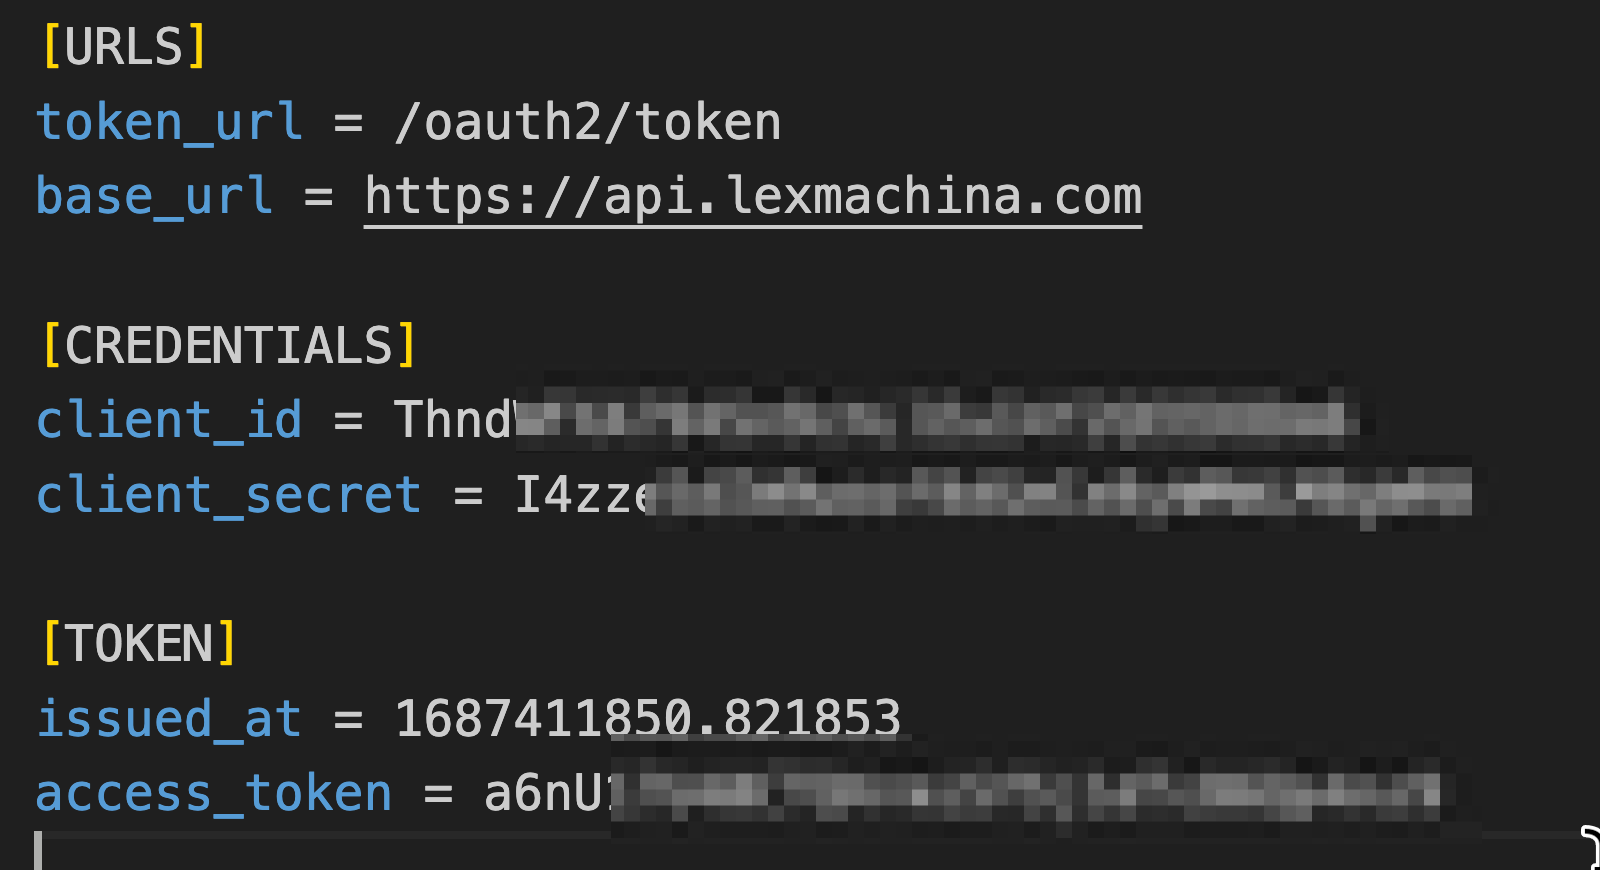 ini file showing base_url=https://api.lexmachina.com